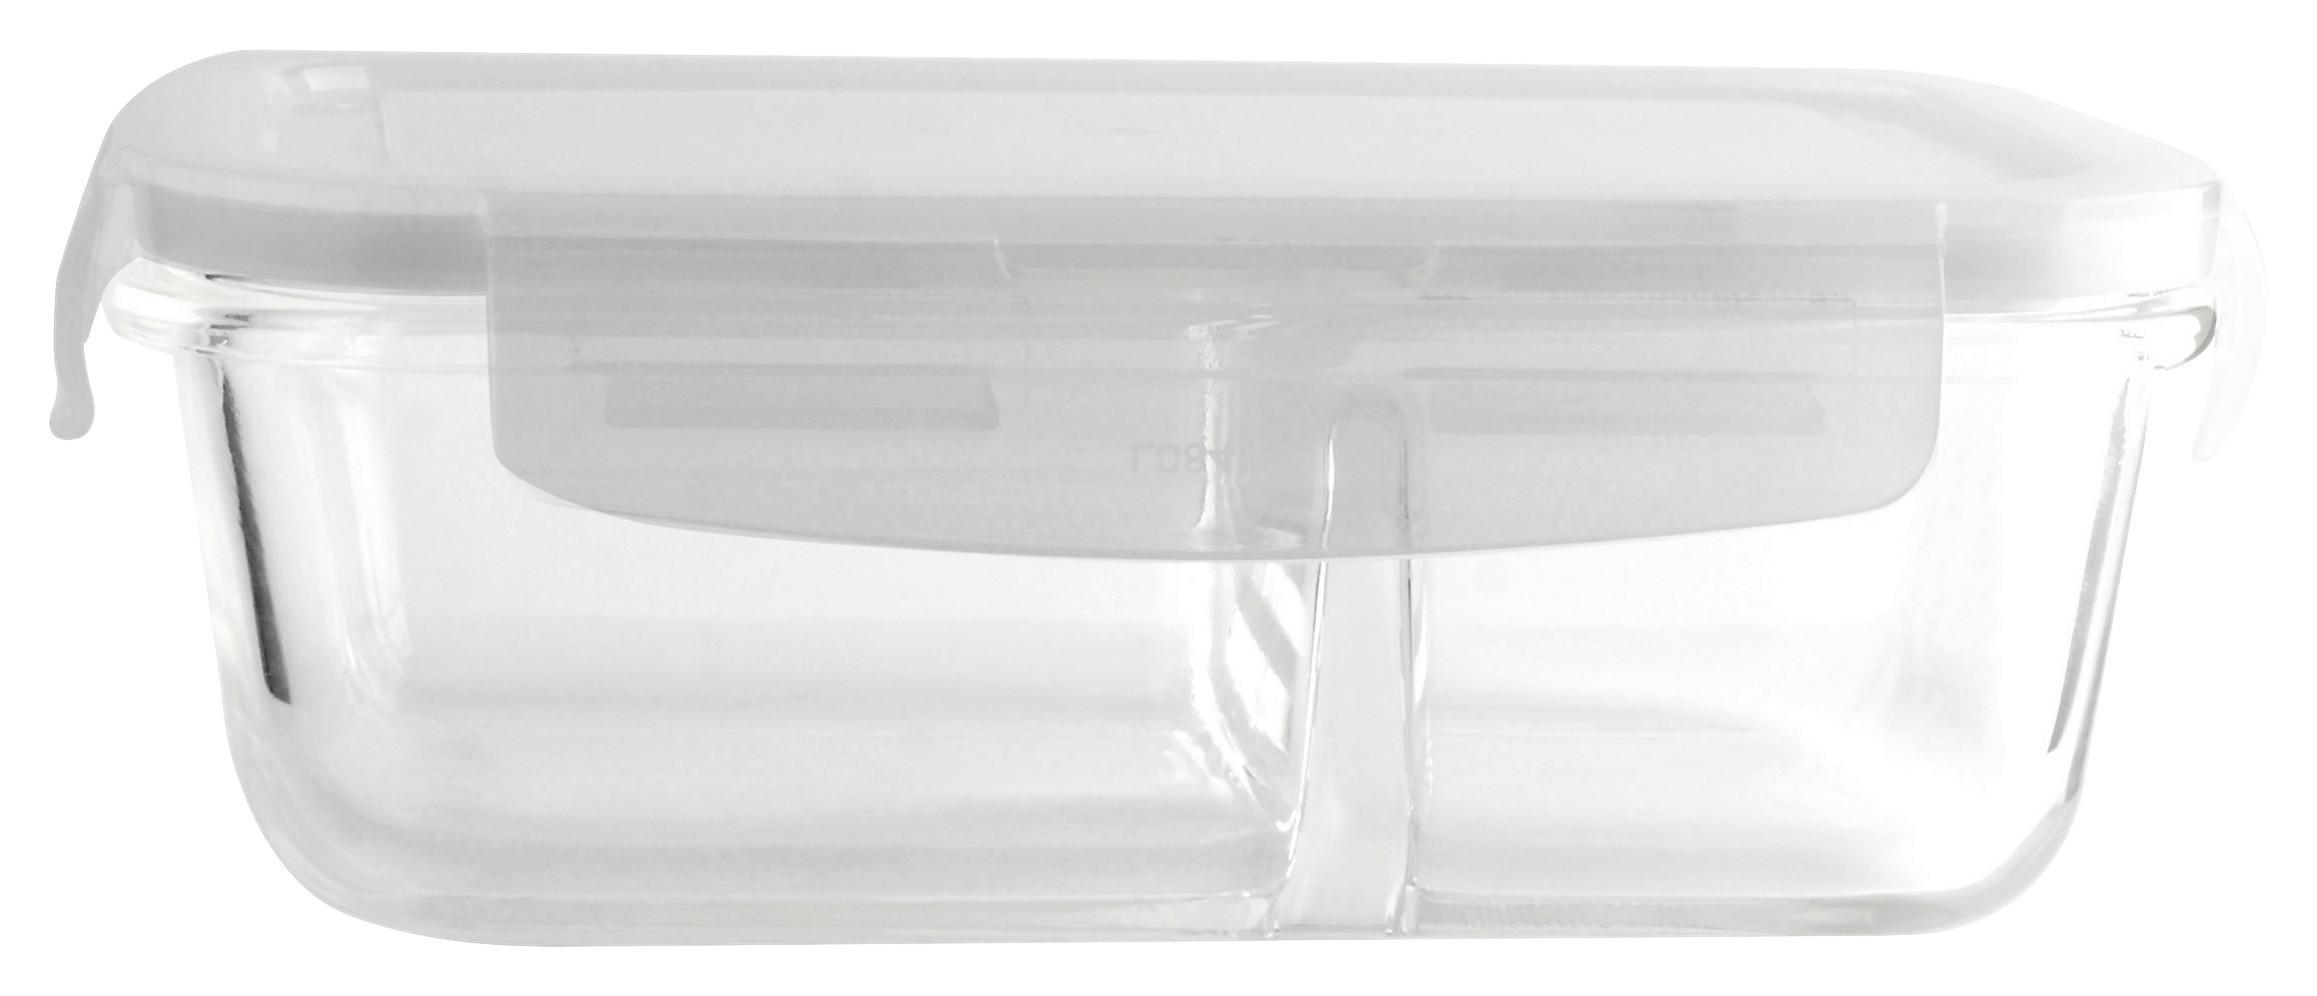 Krabička Na Potraviny Freshy - 0,65l - čiré, plast/sklo (13,5/19,4/6,7cm) - Premium Living